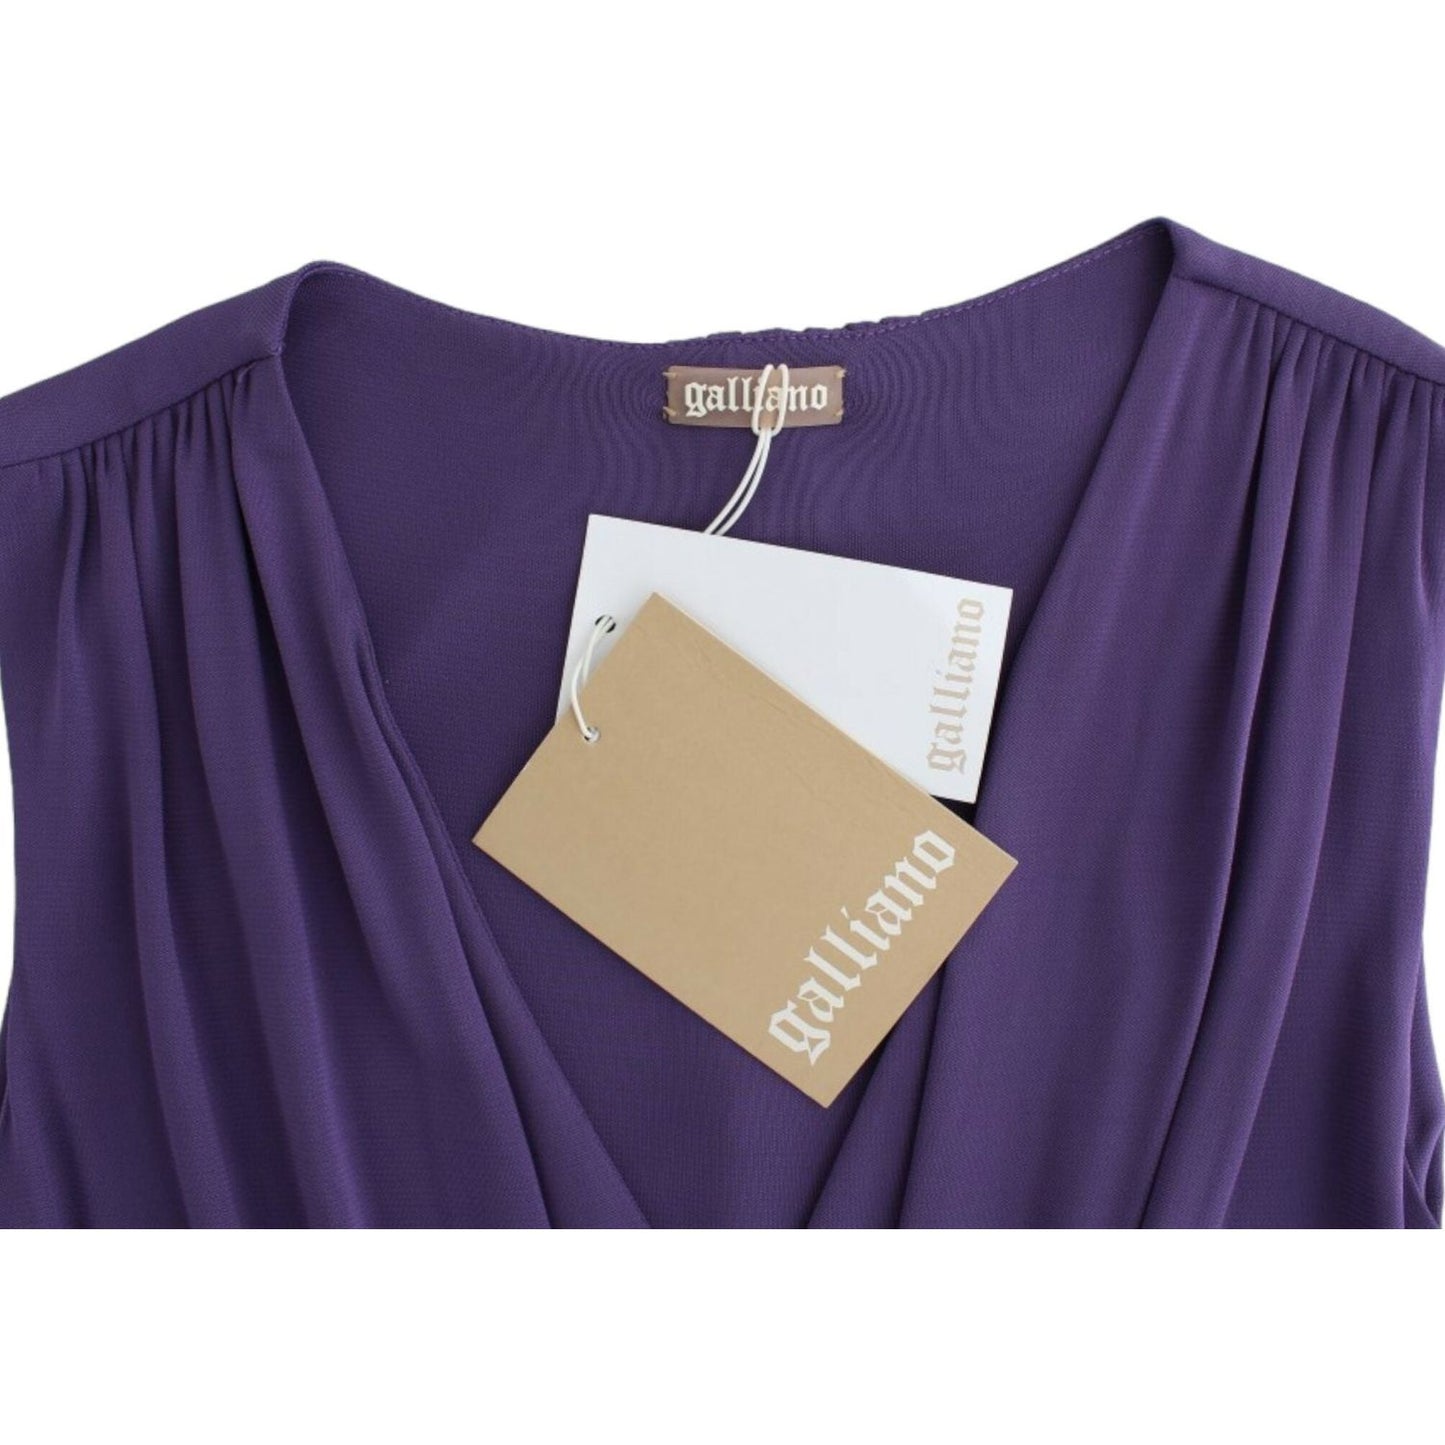 John Galliano Elegant Purple Knee-Length Jersey Dress purple-sheath-dress 6952-purple-sheath-dress-5-scaled-b2a5b5d1-5d2.jpg